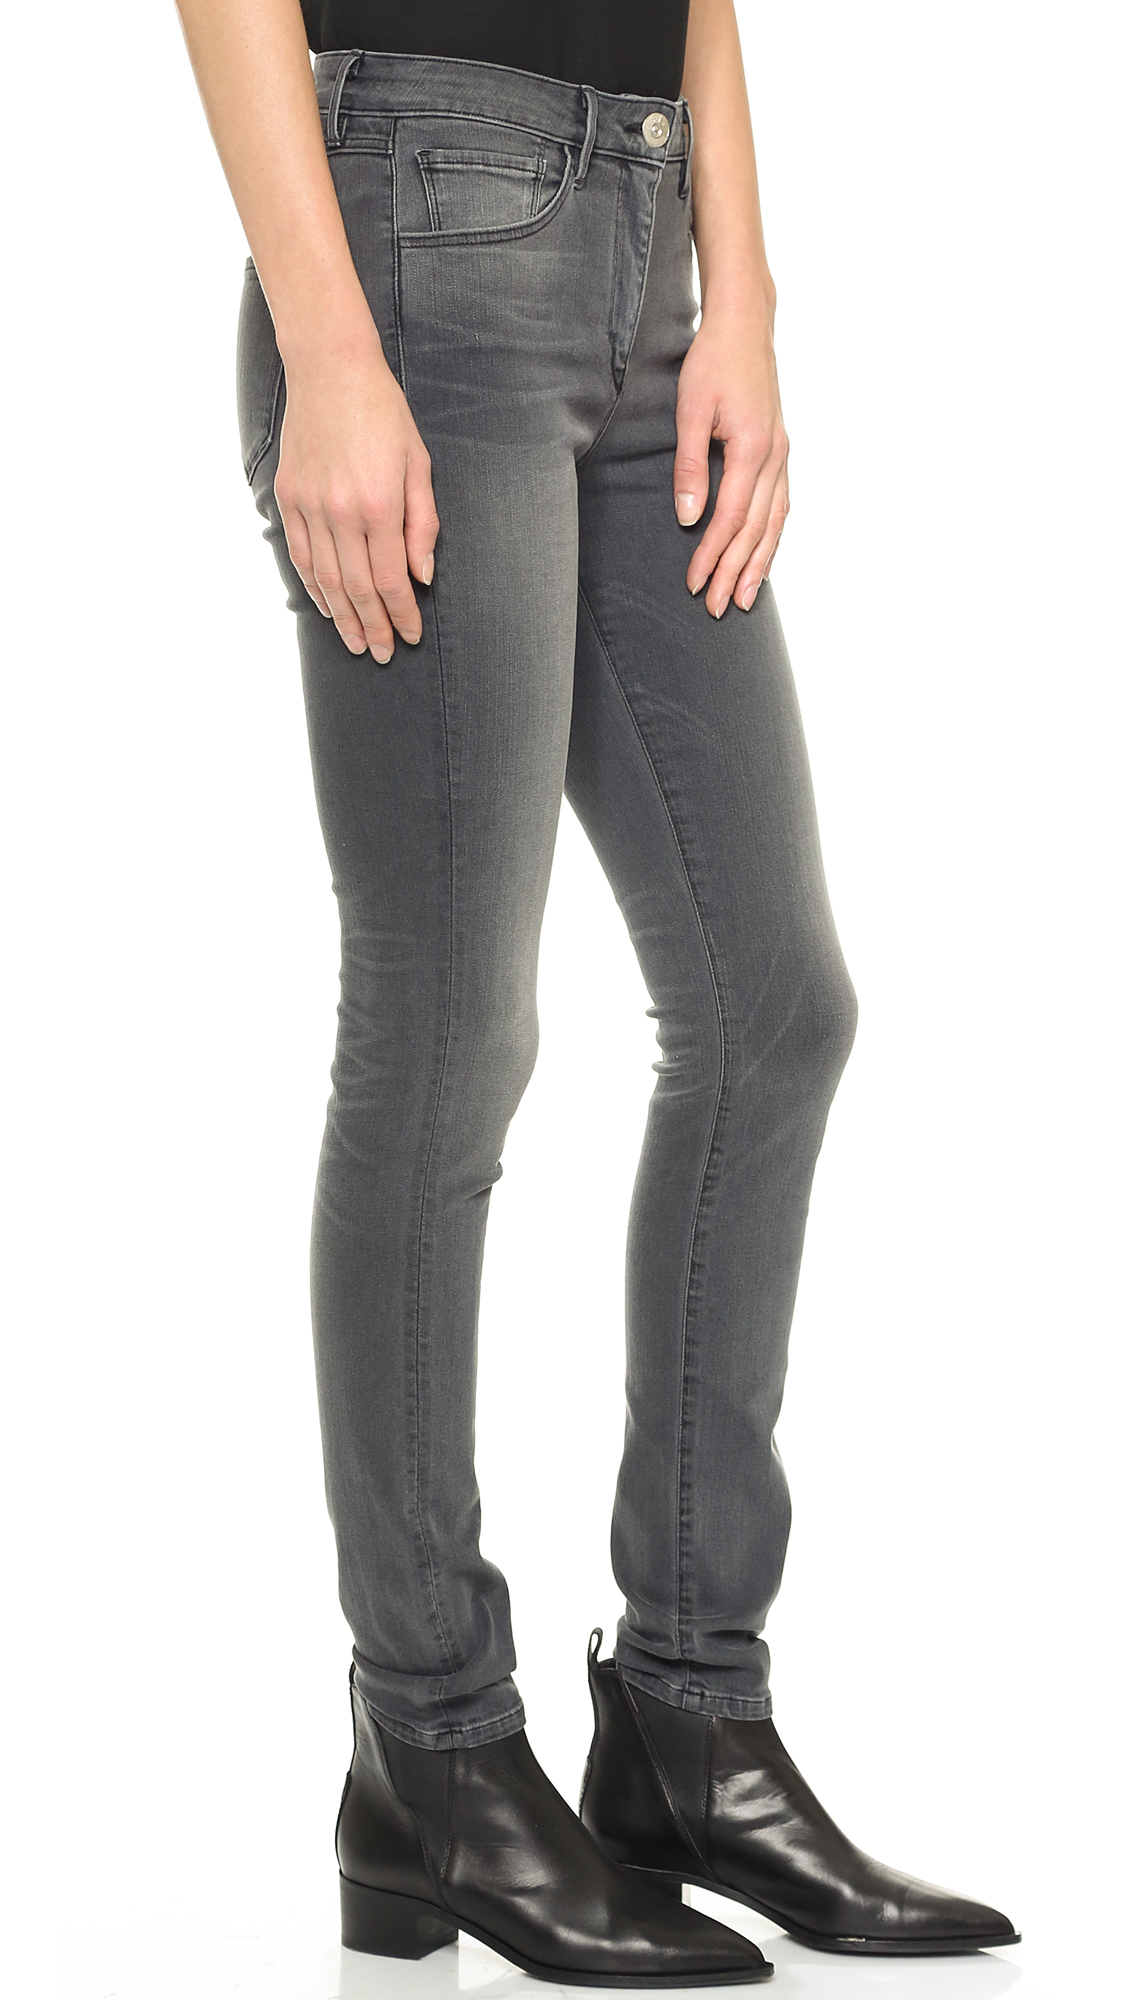 Lyst - 3X1 W3 High Rise Skinny Jeans - Steel in Gray